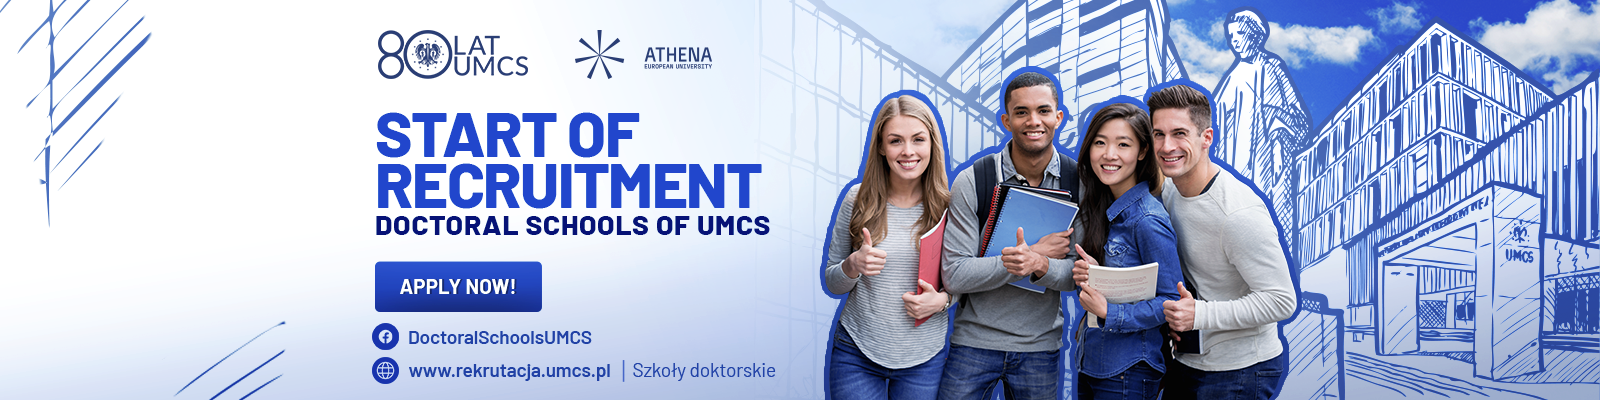 Doctoral Schools of UMCS - Start of recruitment